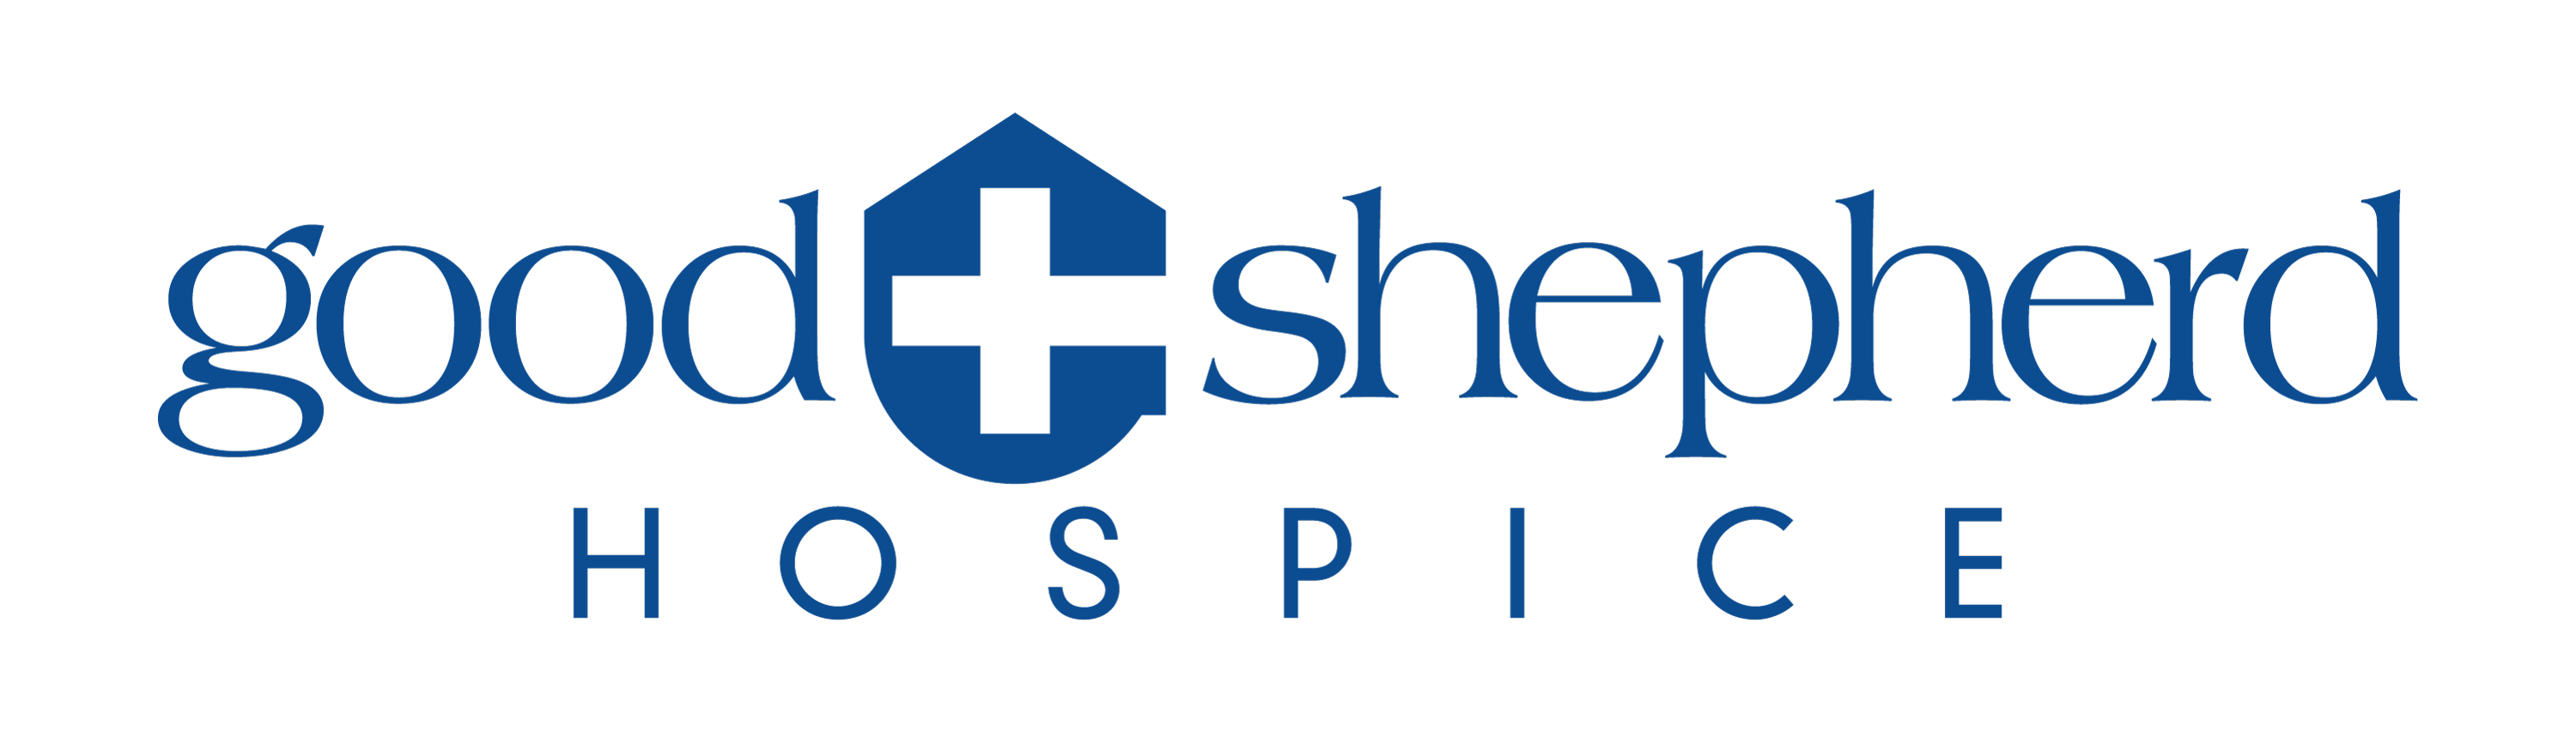 R.  Good Shepherd Hospice (Tier 4)